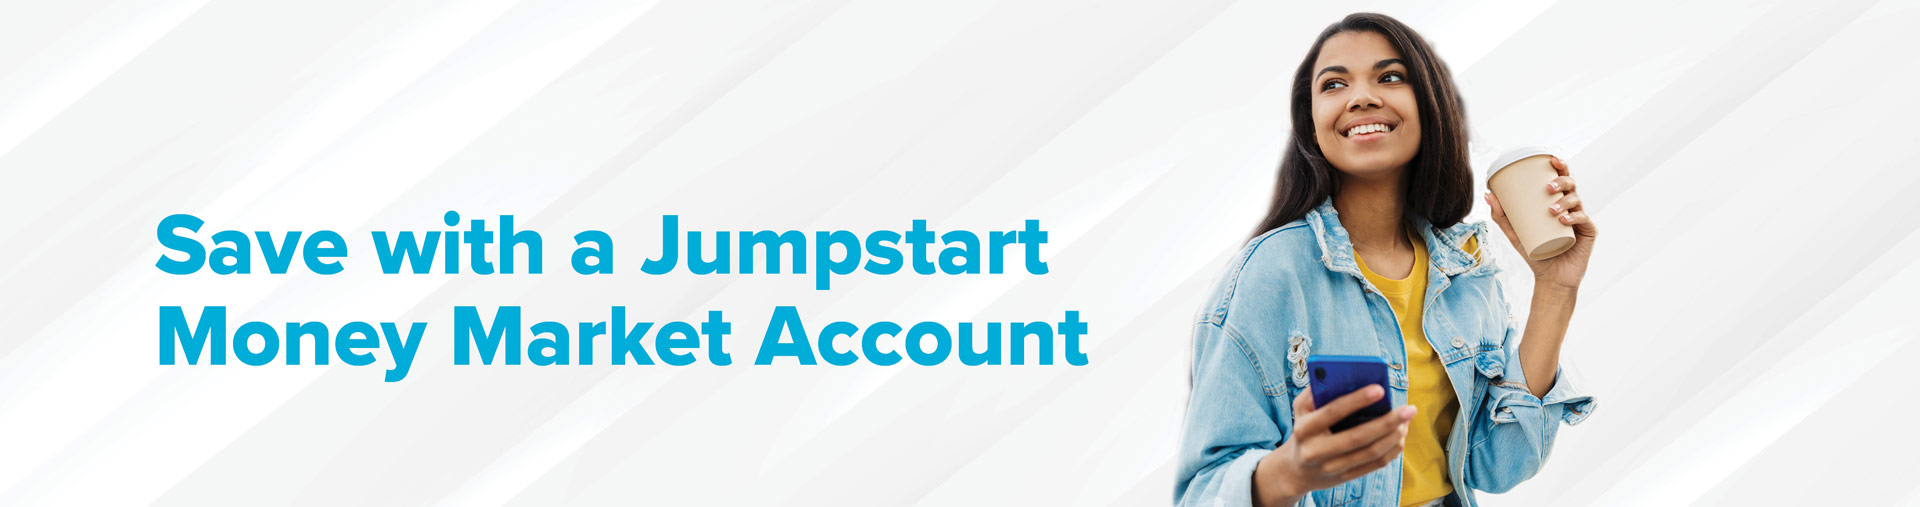 Save with a Jumpstart Money Market Account